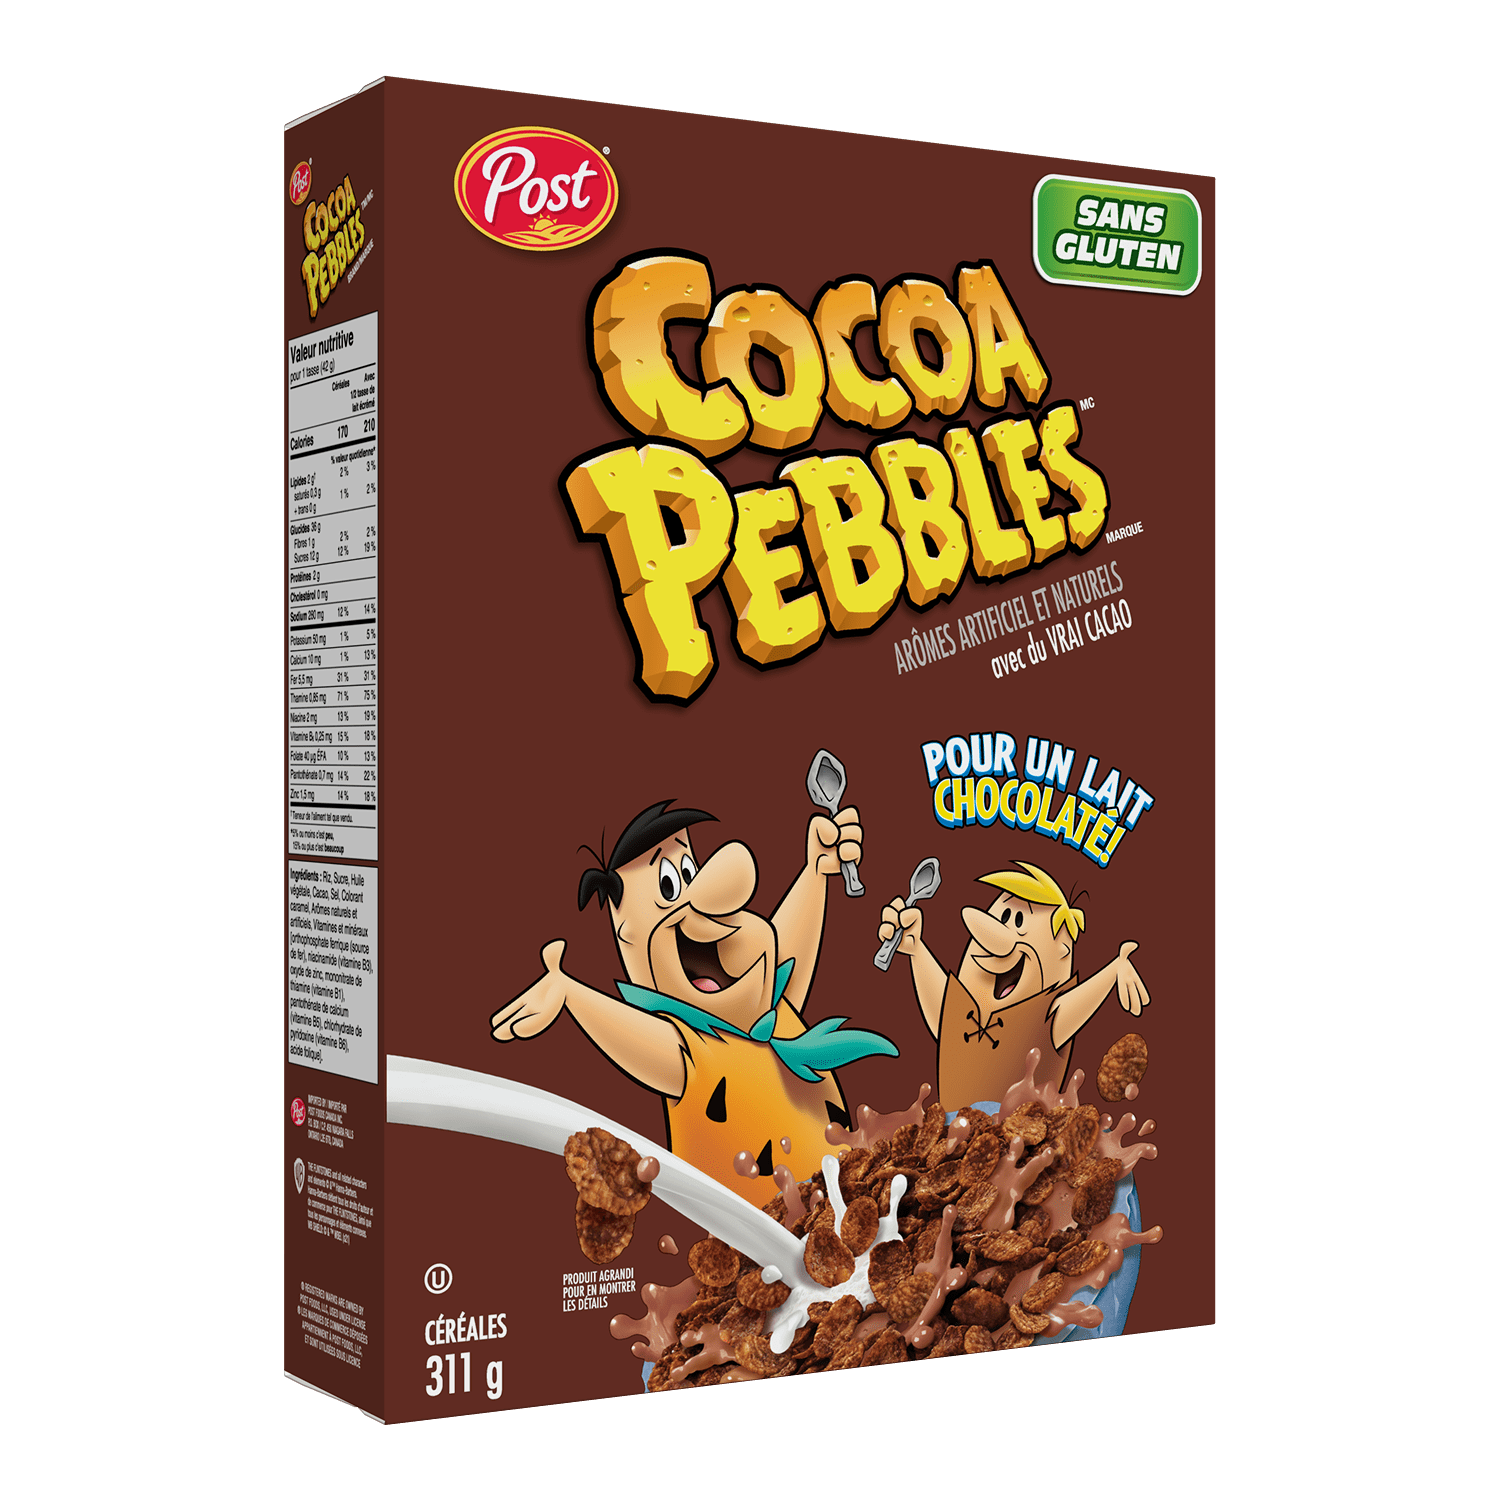 Cocoa PEBBLES cereal